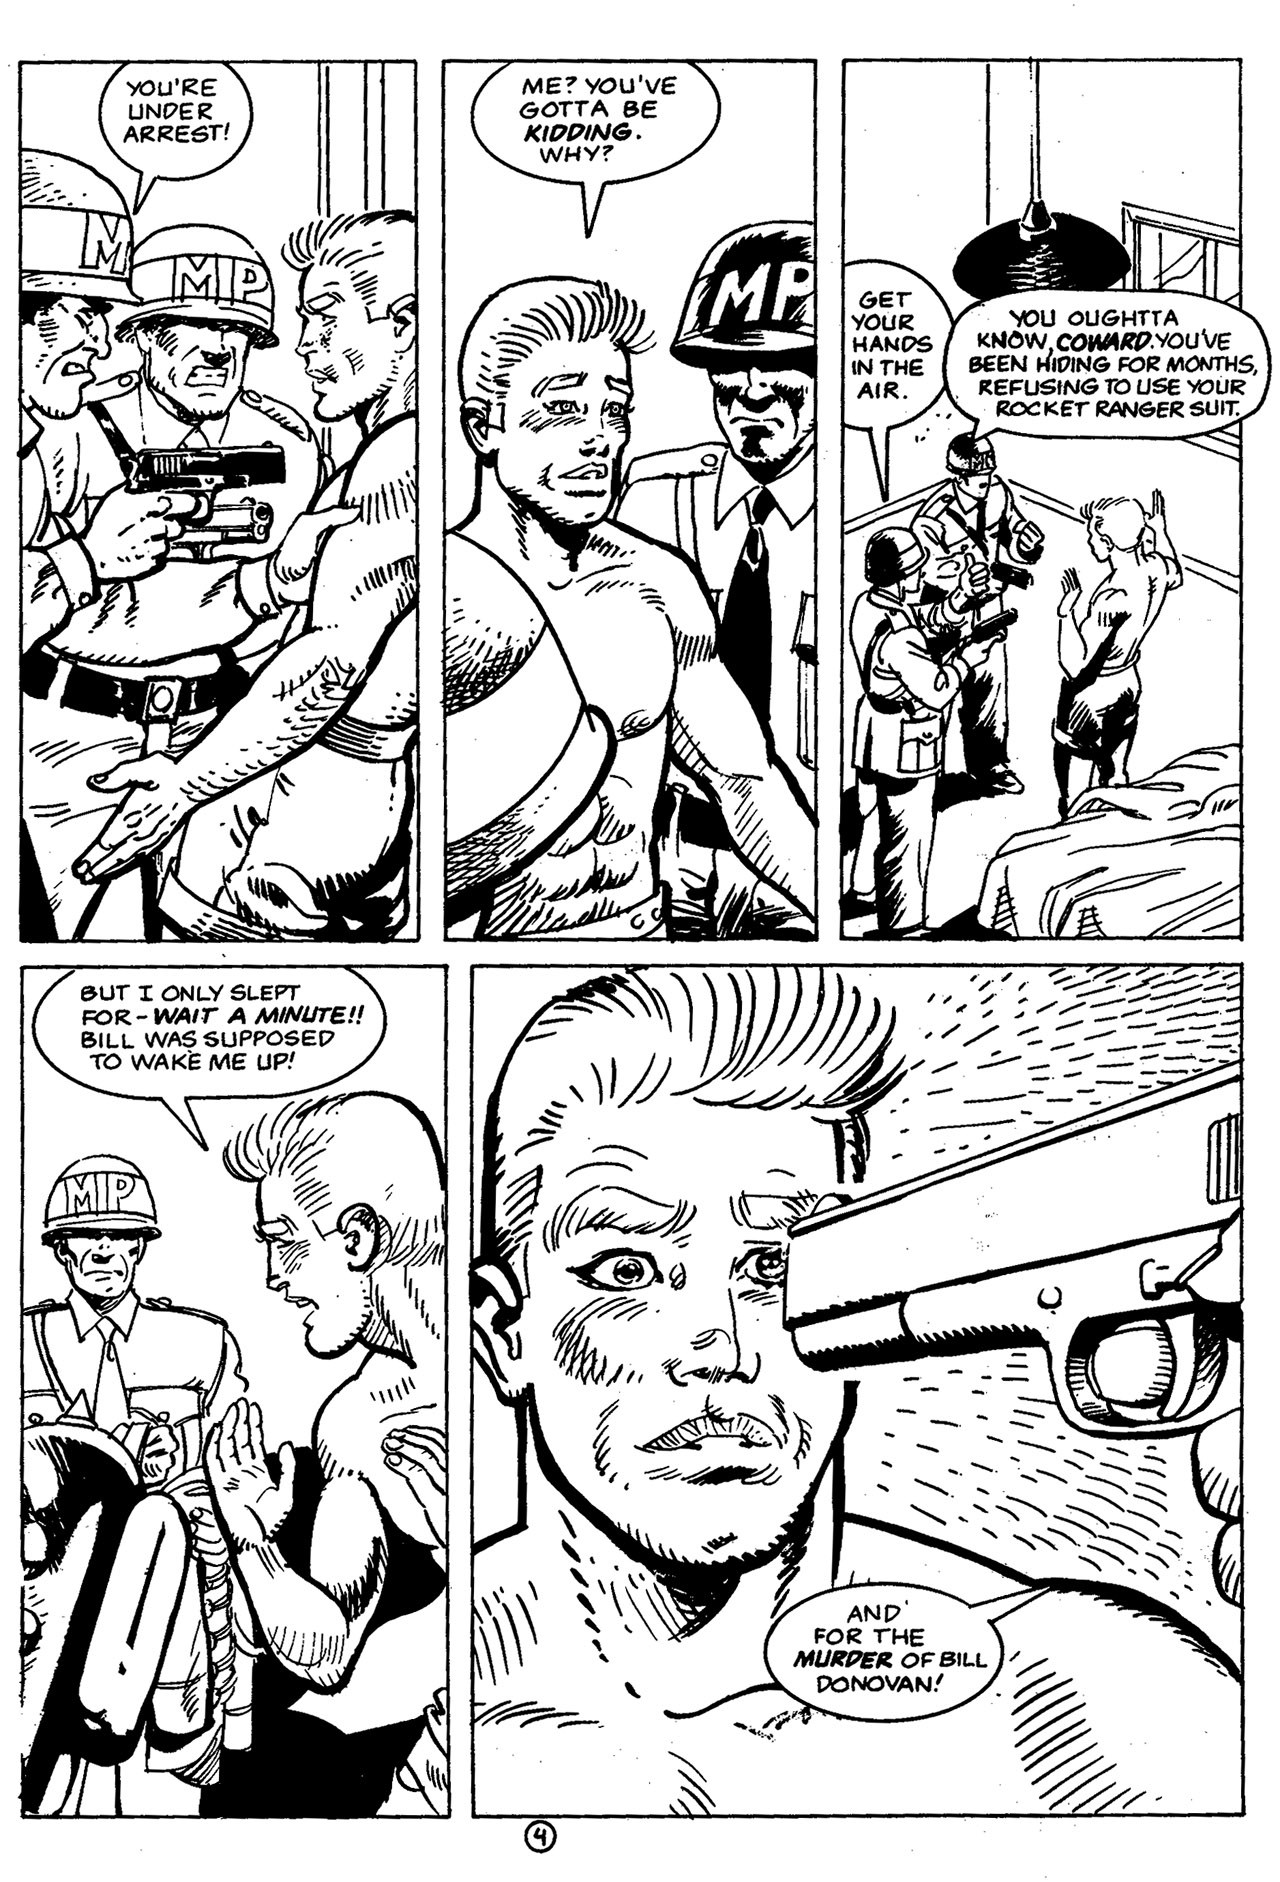 Read online Rocket Ranger comic -  Issue #5 - 6